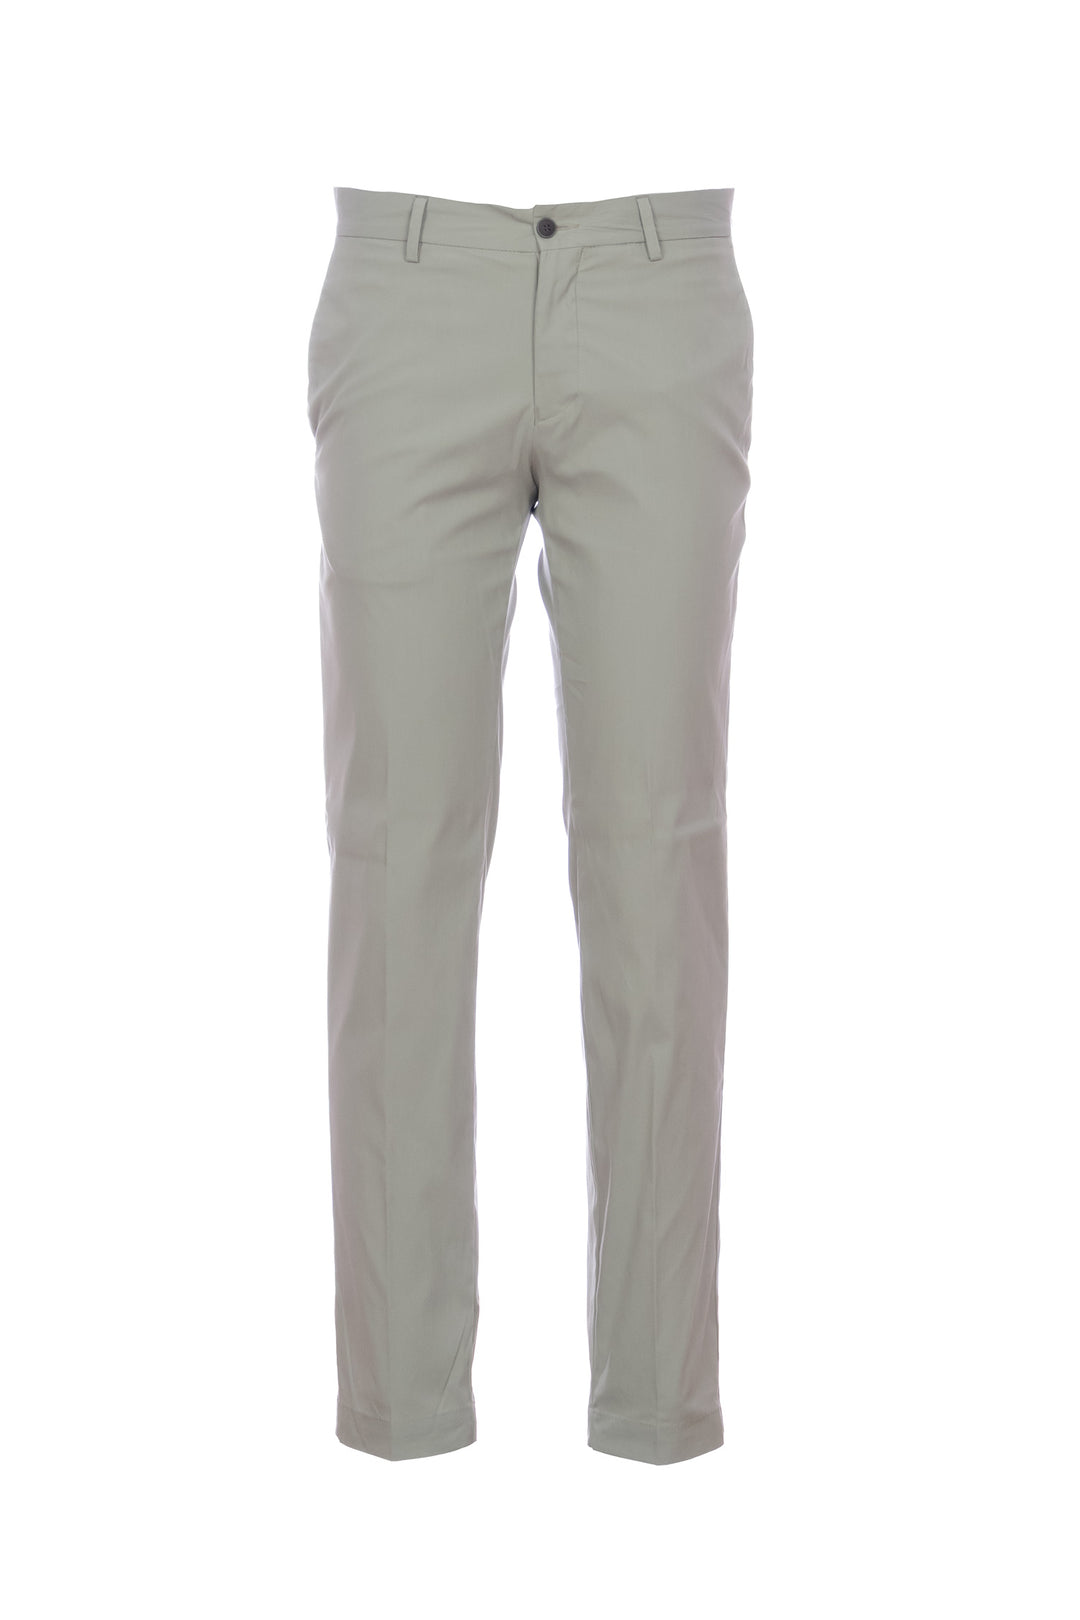 Germano Pantalone chino “GLOBE TROTTER” beige scuro in cotone stretch - Mancinelli 1954